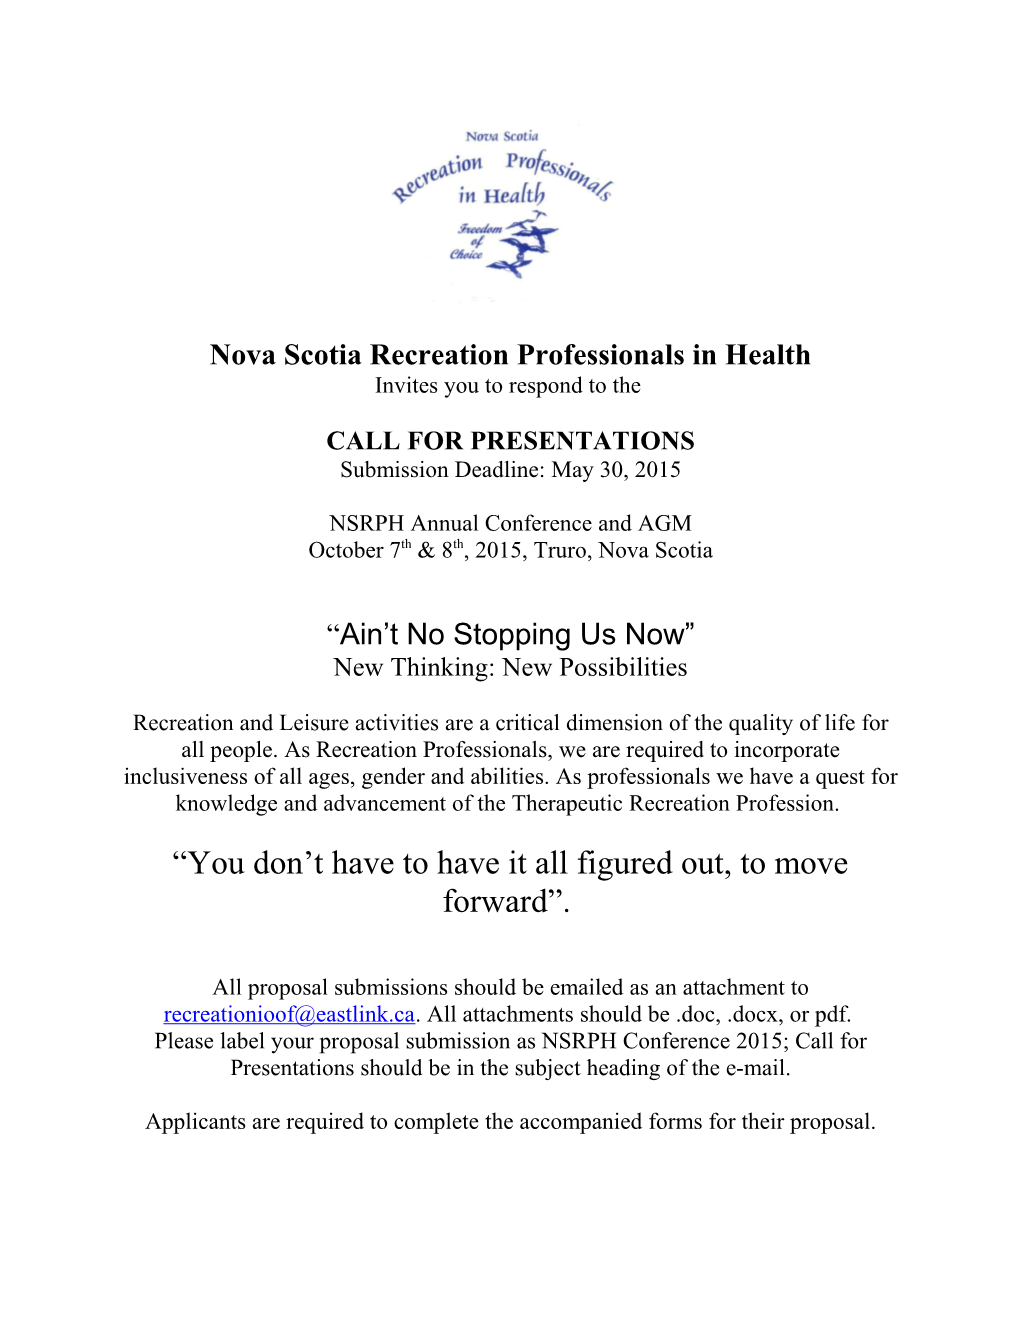 Nova Scotia Recreation Professionals in Health